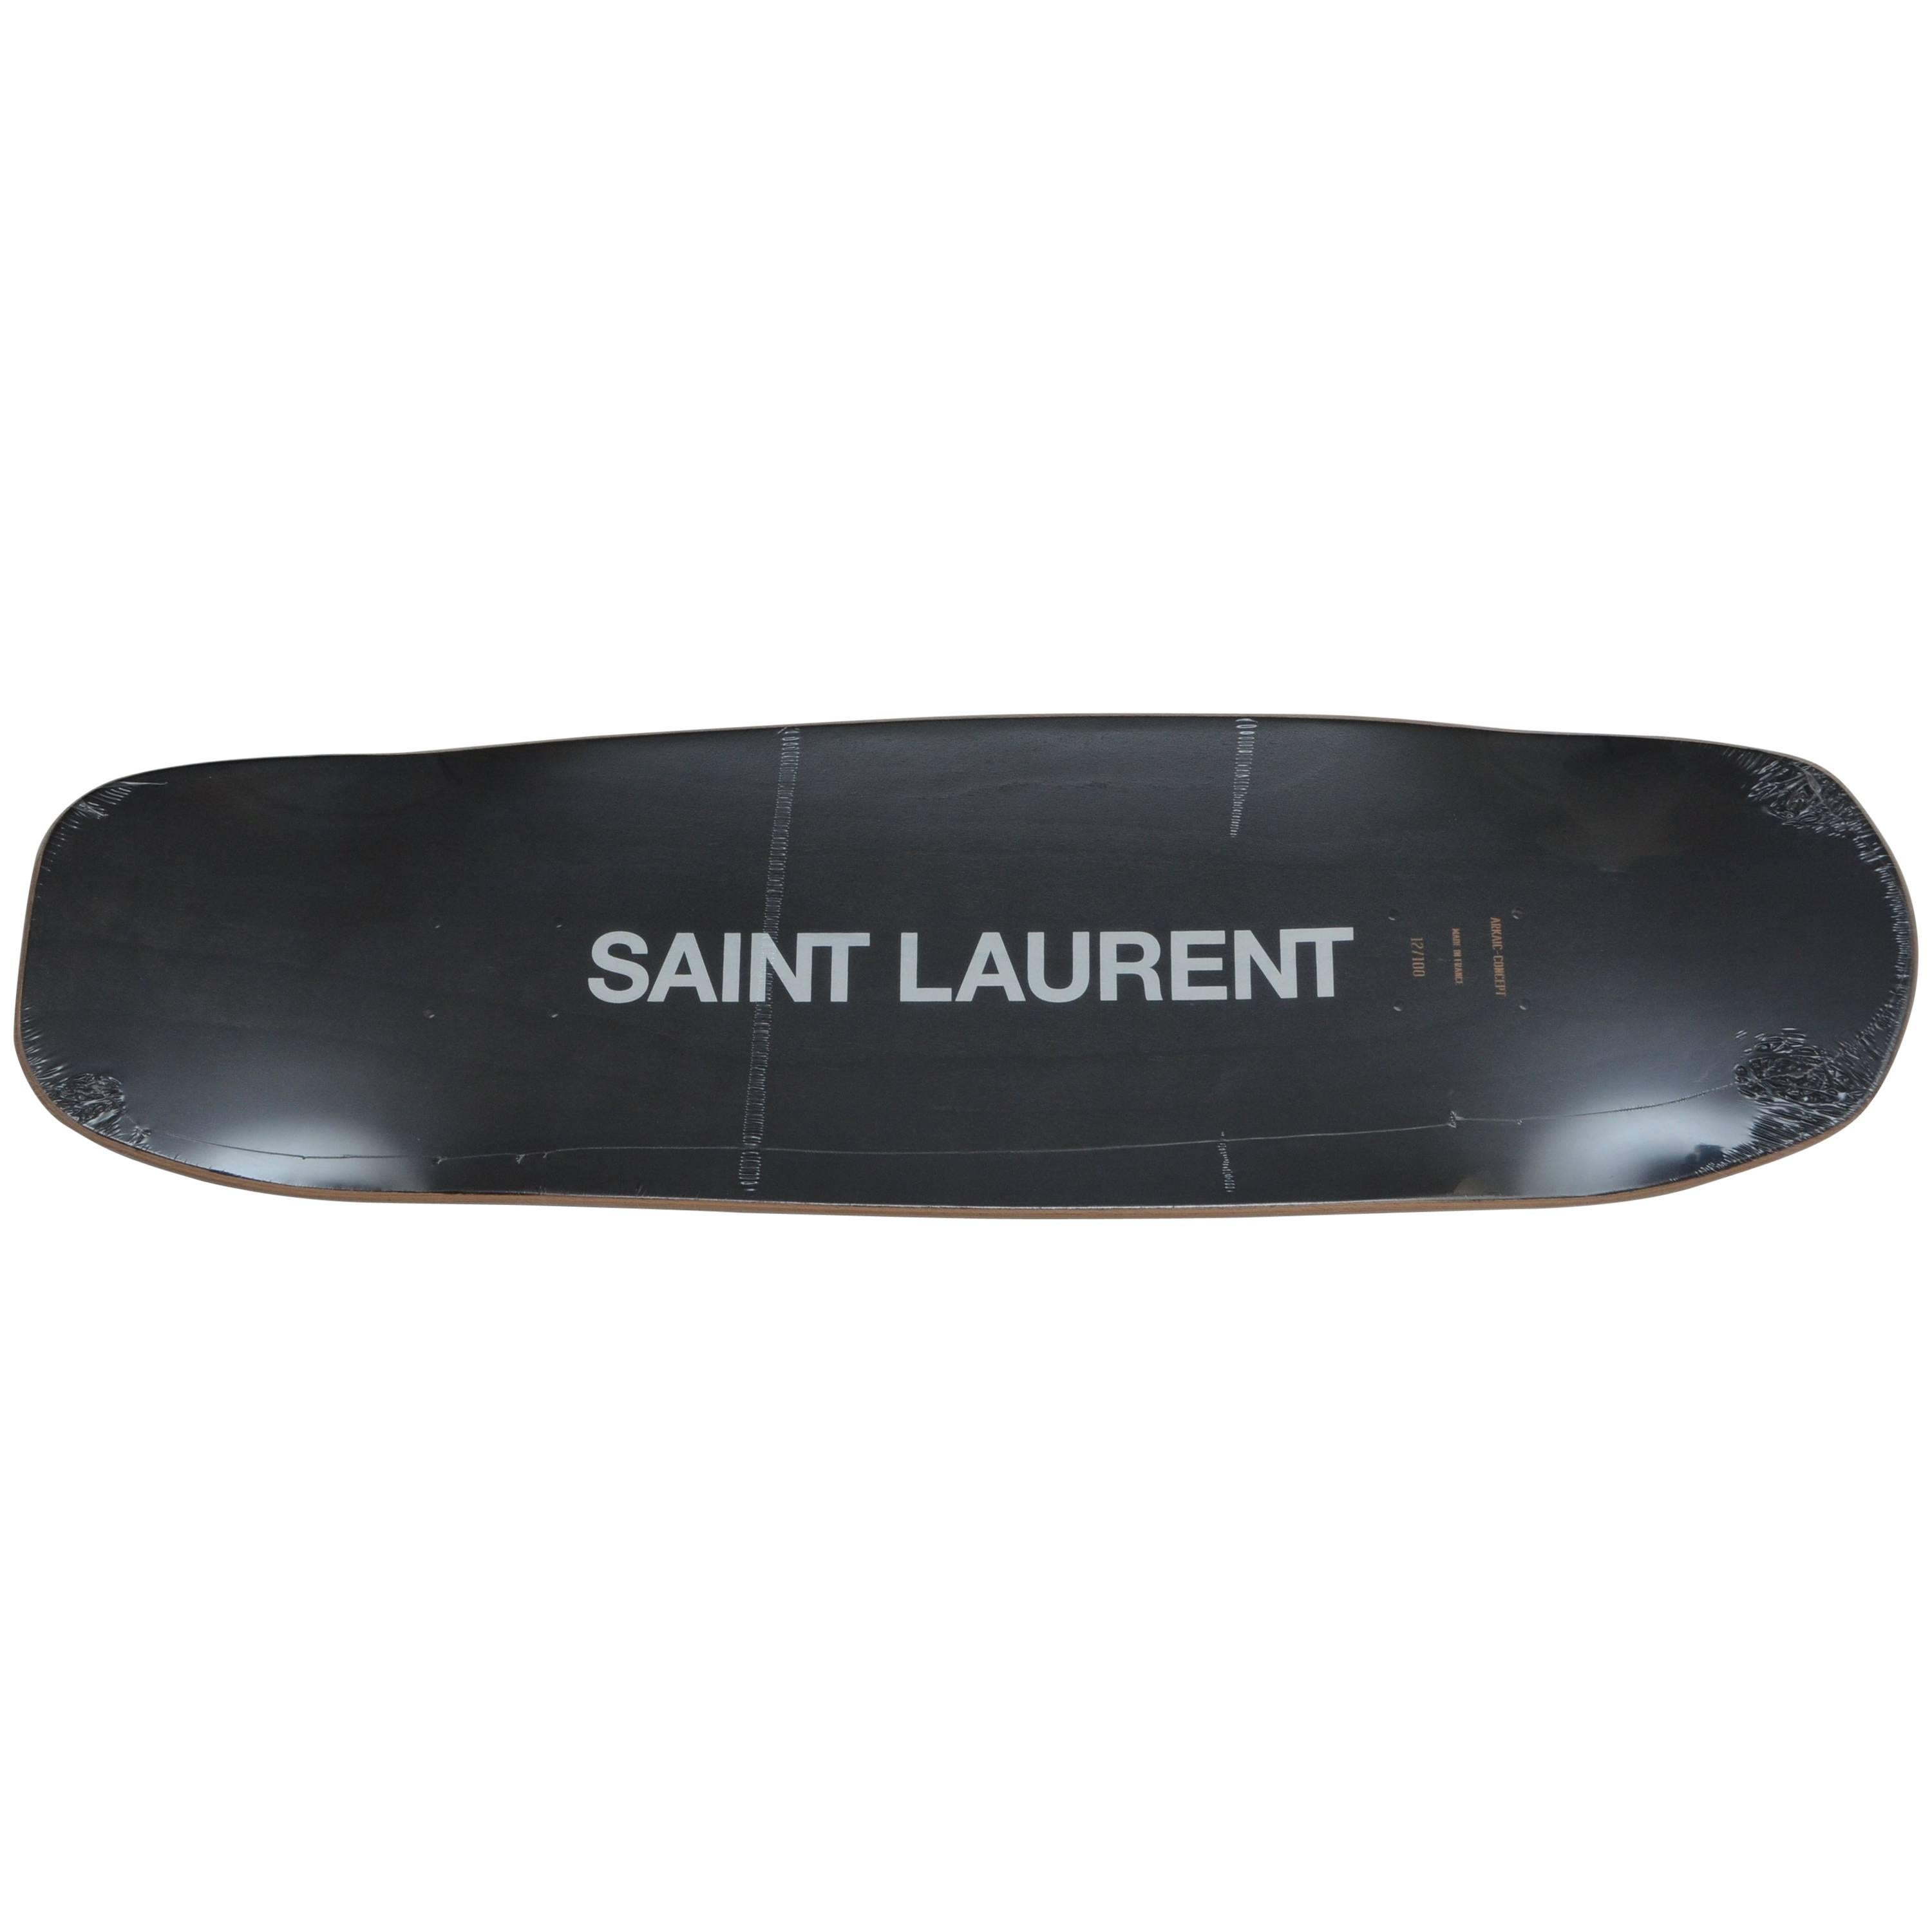 Yves Saint Laurent Vaccarello X Colette Collaboration Skateboard 12/100  NEW